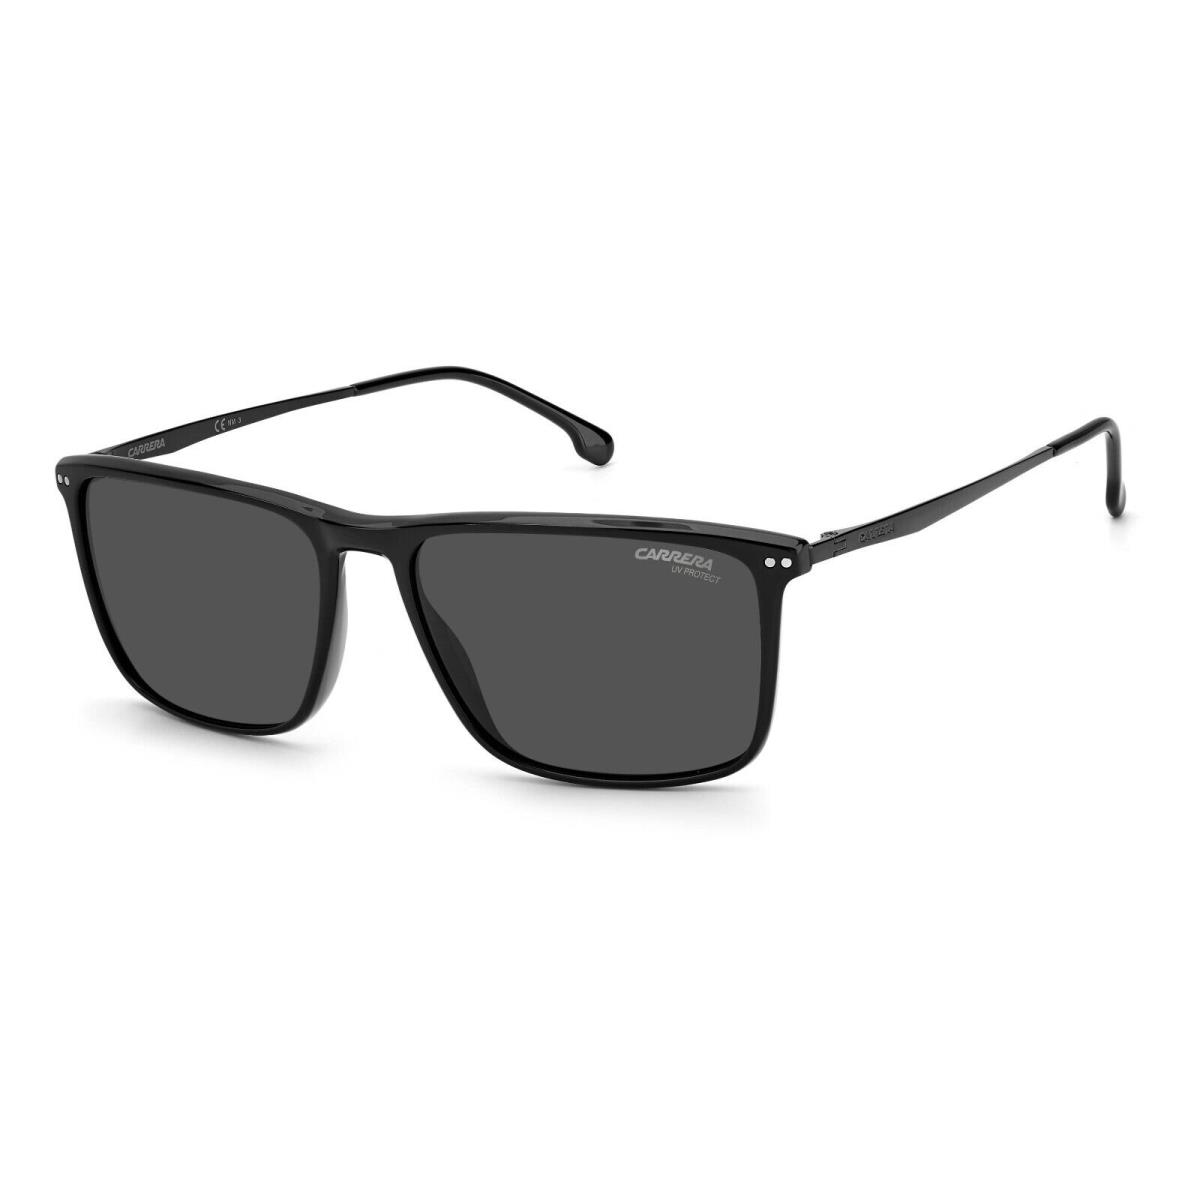 Carrera Sunglasses C8049/S 0807 IR Black/grey Lens 58mm